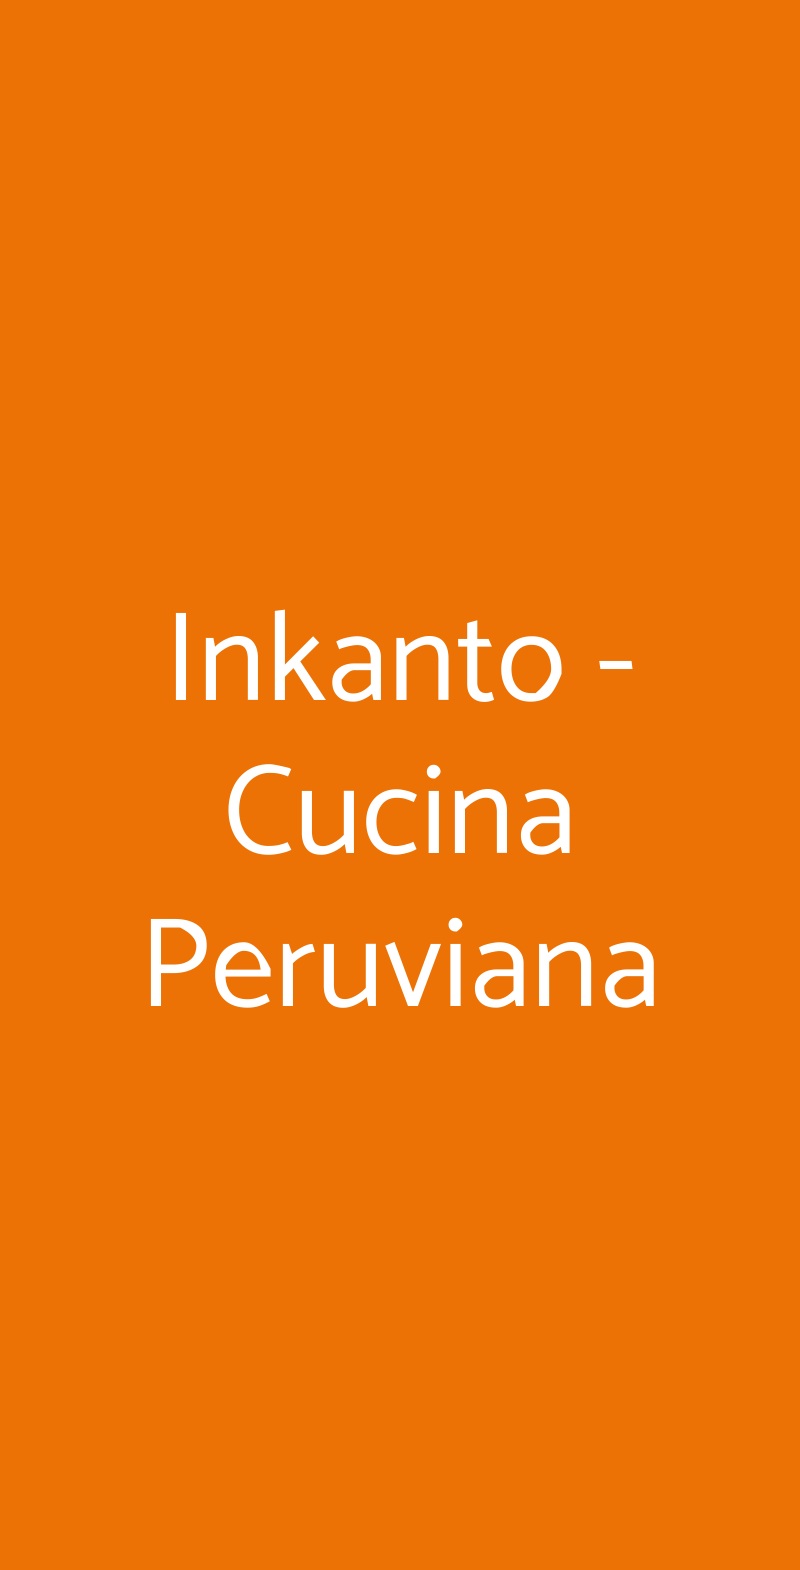 Inkanto - Cucina Peruviana Milano menù 1 pagina